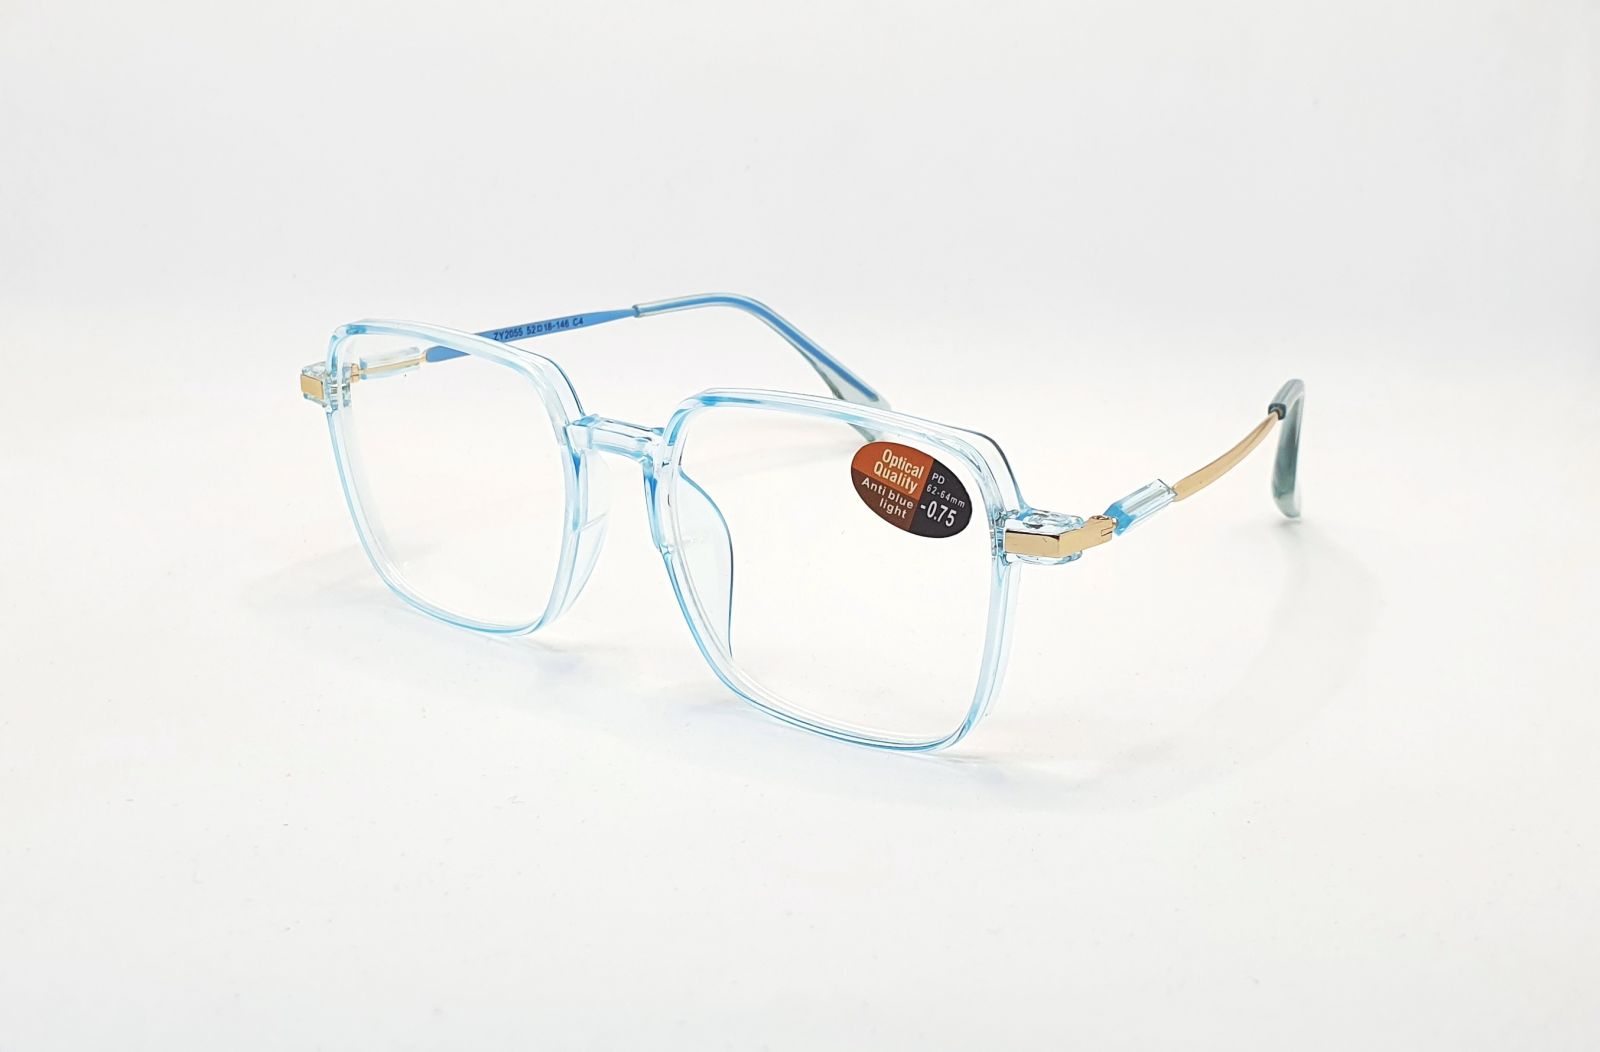 Samozabarvovací dioptrické brýle N01-03 / -1,50 blue